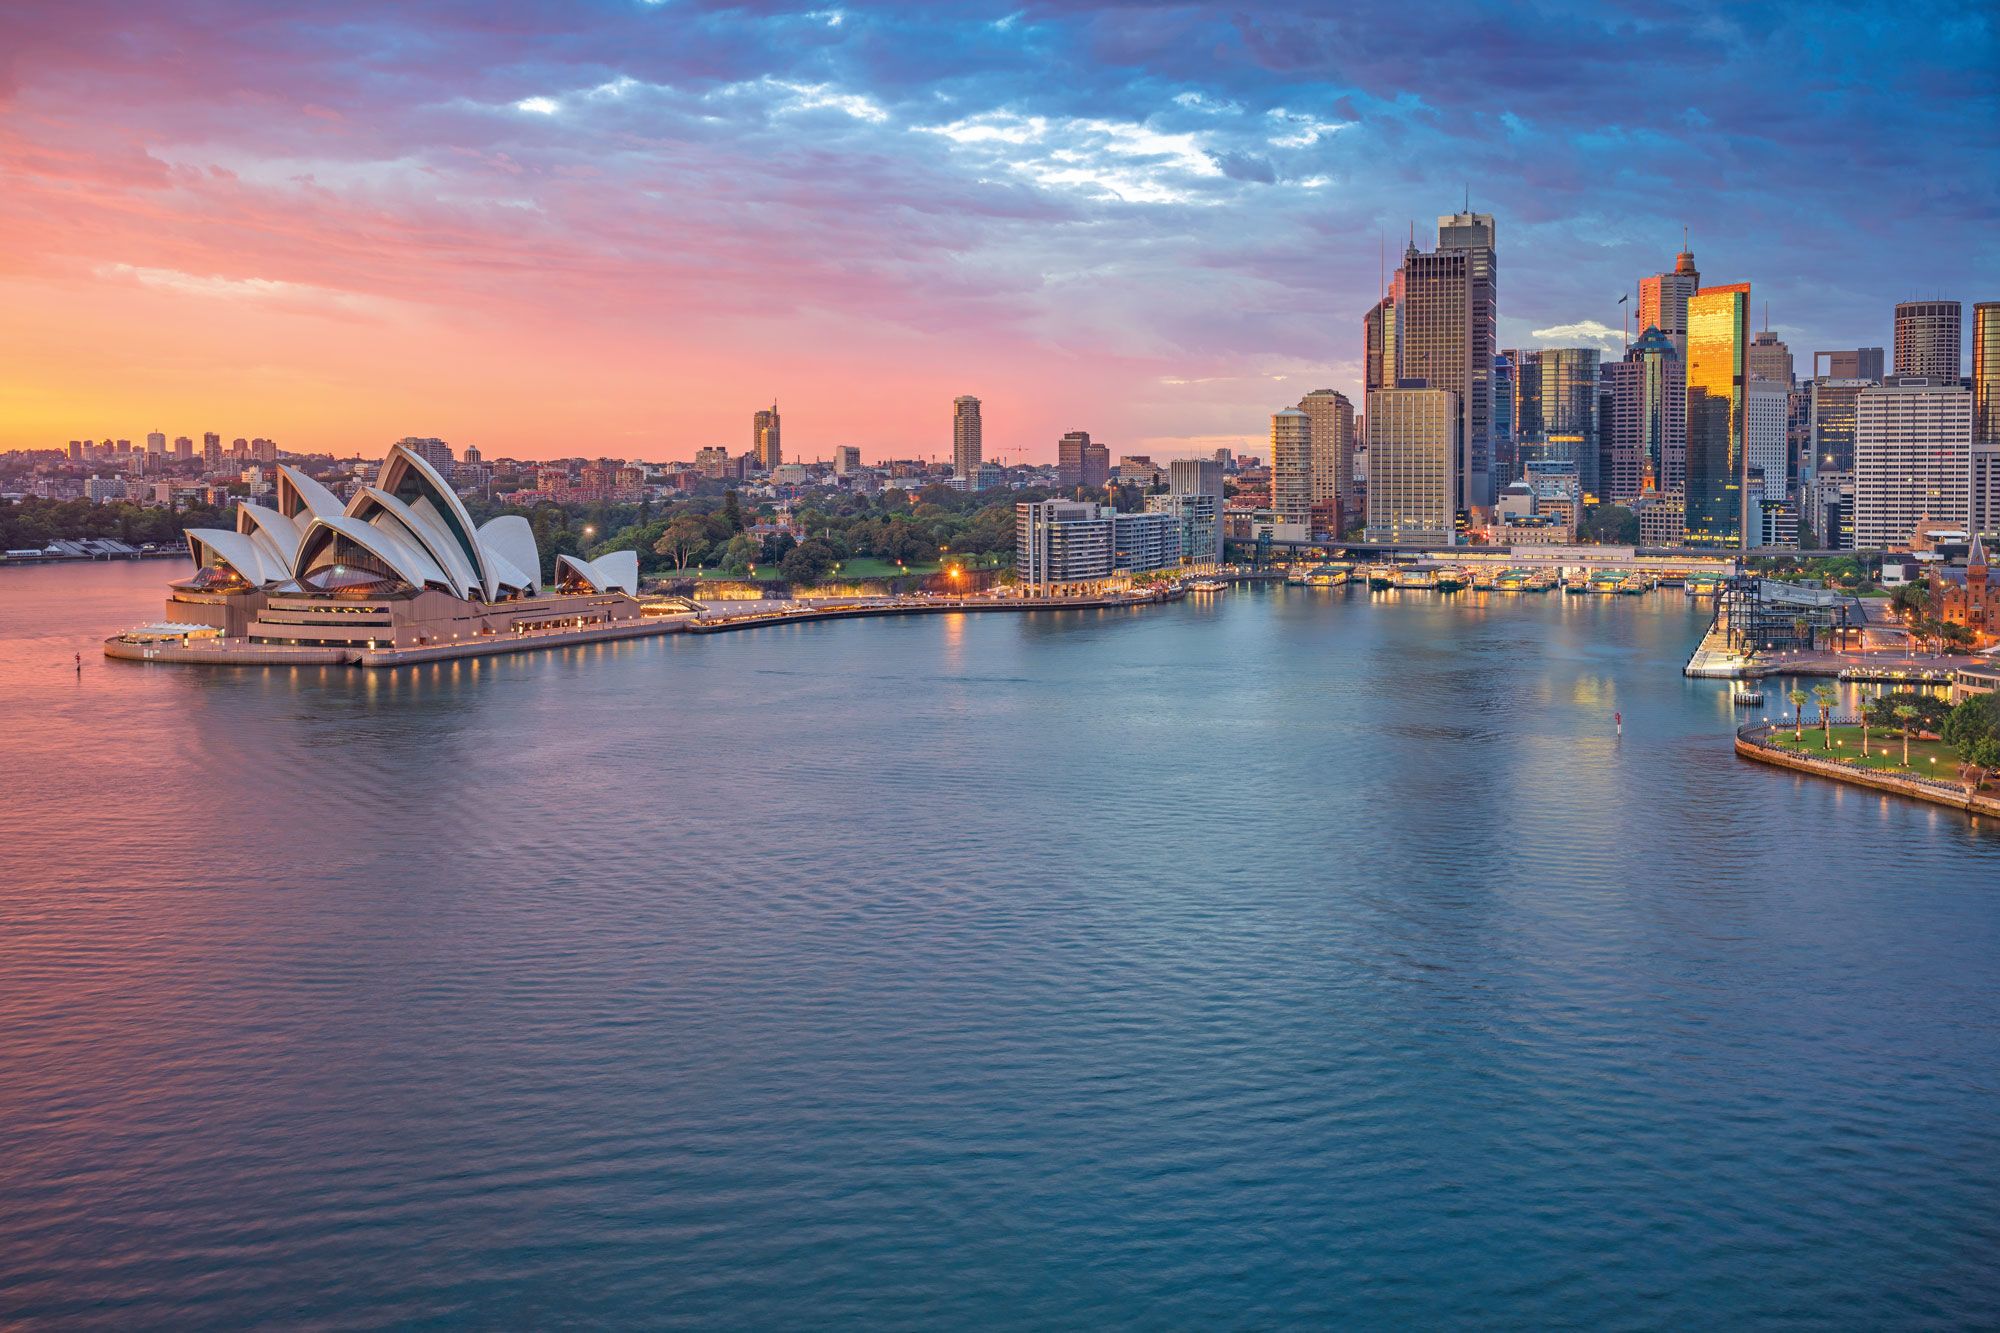 The Sydney Opera House and the city’s skyline. (Photo by Rudy Balasko/Shutterstock.com)